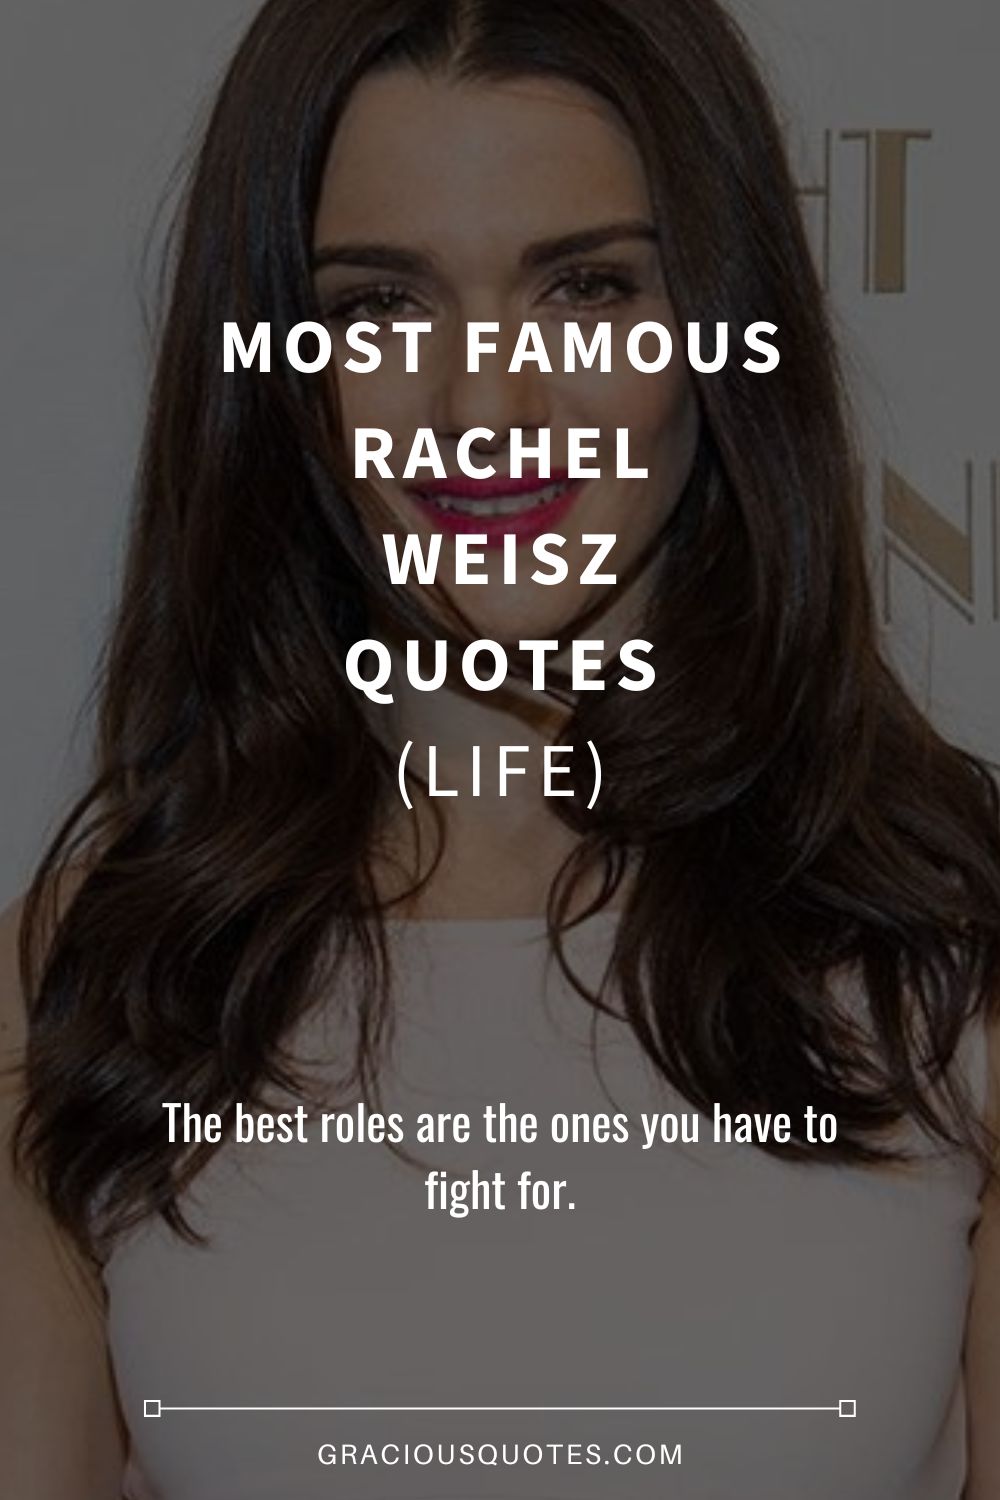 Most Famous Rachel Weisz Quotes (LIFE) - Gracious Quotes